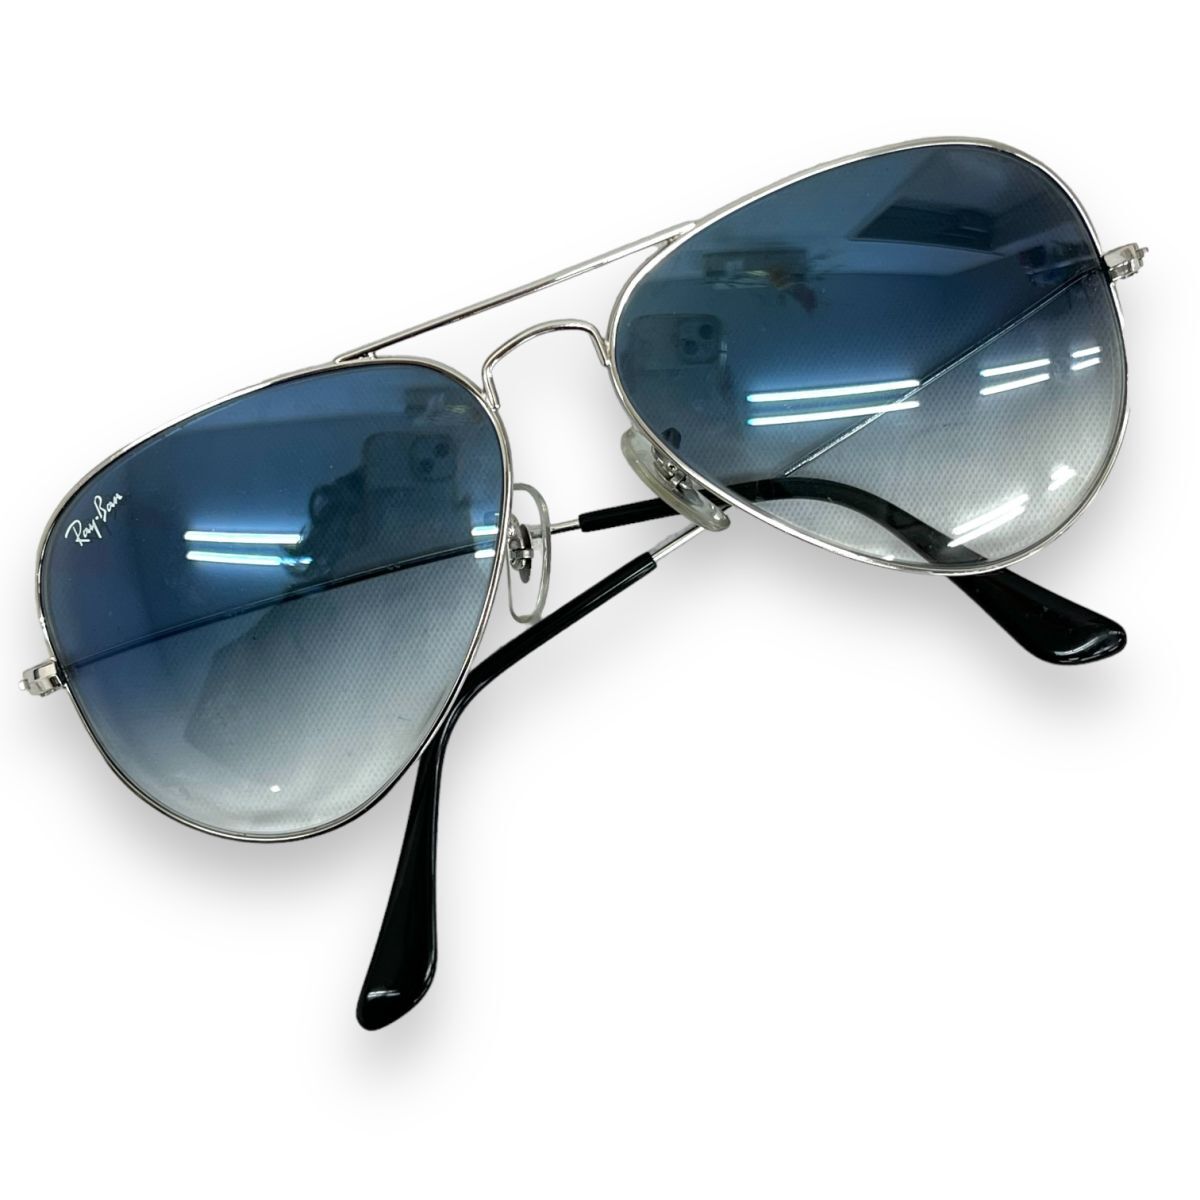 Ray-Ban RayBan солнцезащитные очки очки I одежда мода бренд Teardrop RB3025 авиатор AVIATOR голубой градация 